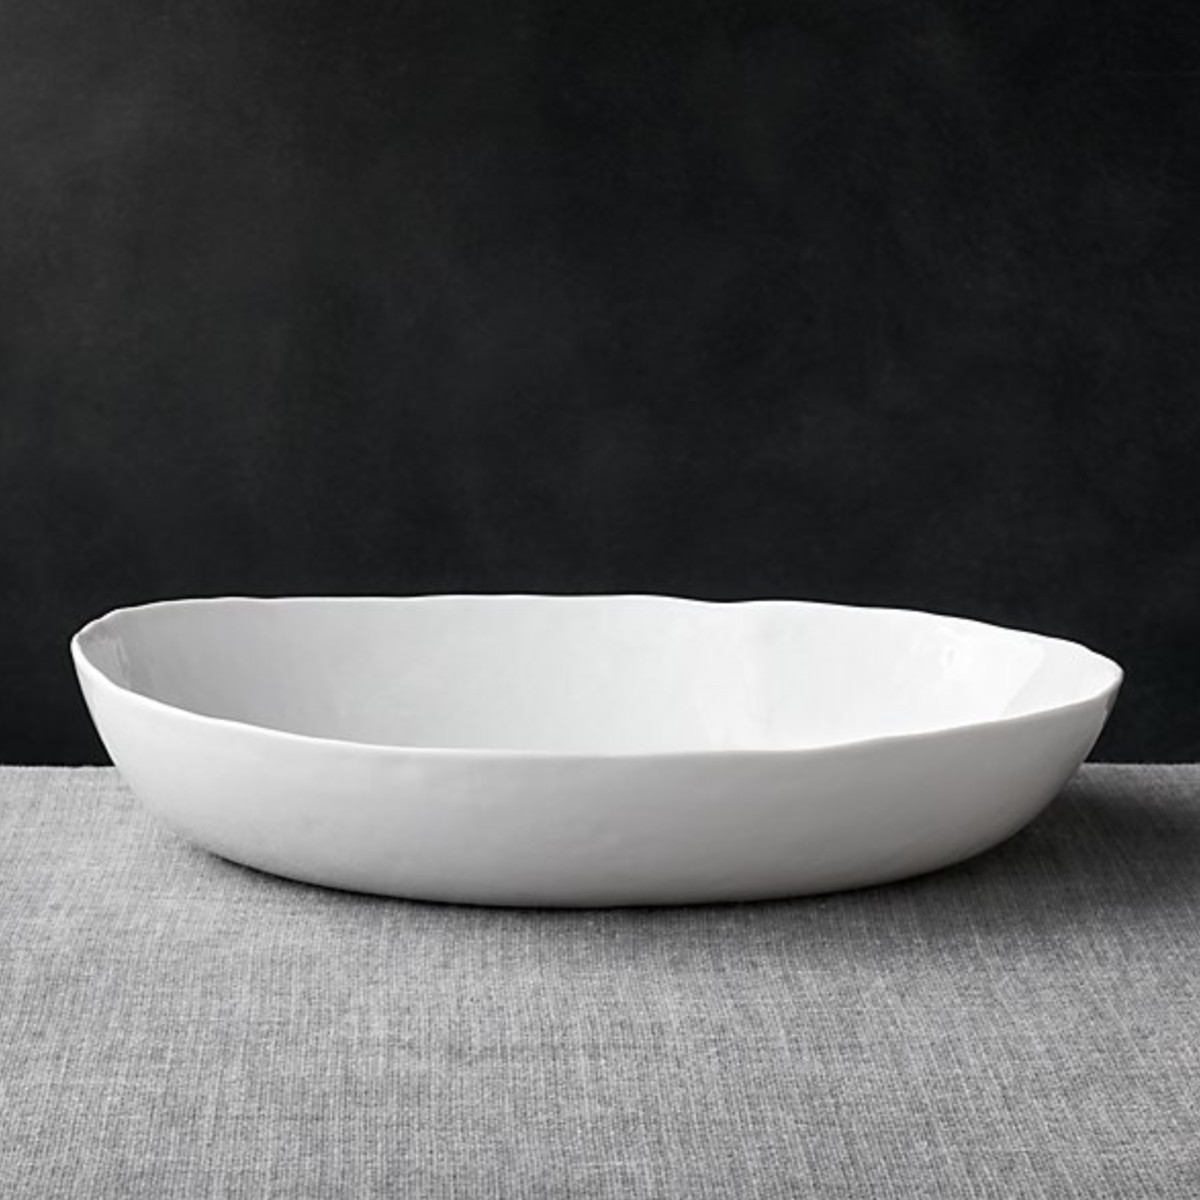 A white, oval shaped bowl. 